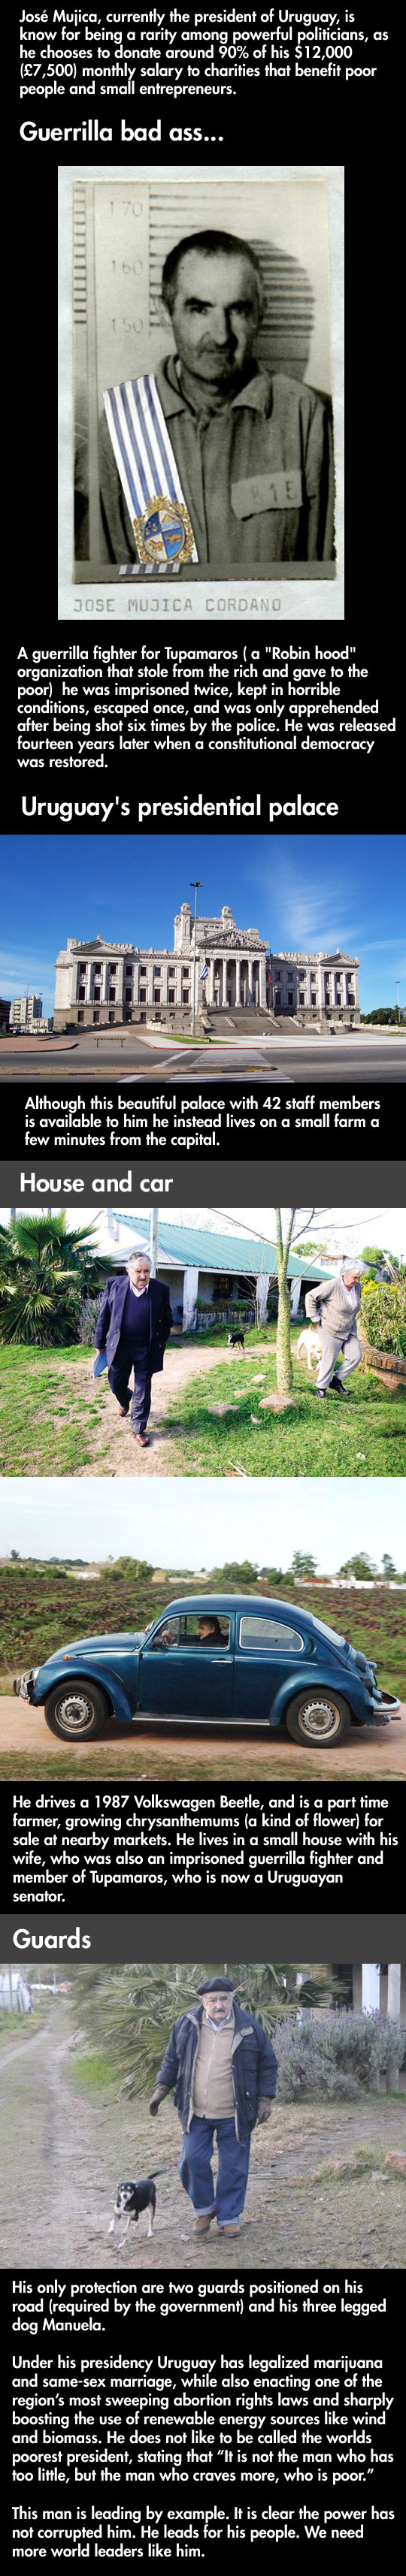 cool-Uruguay-president-Jose-Mujica-poor